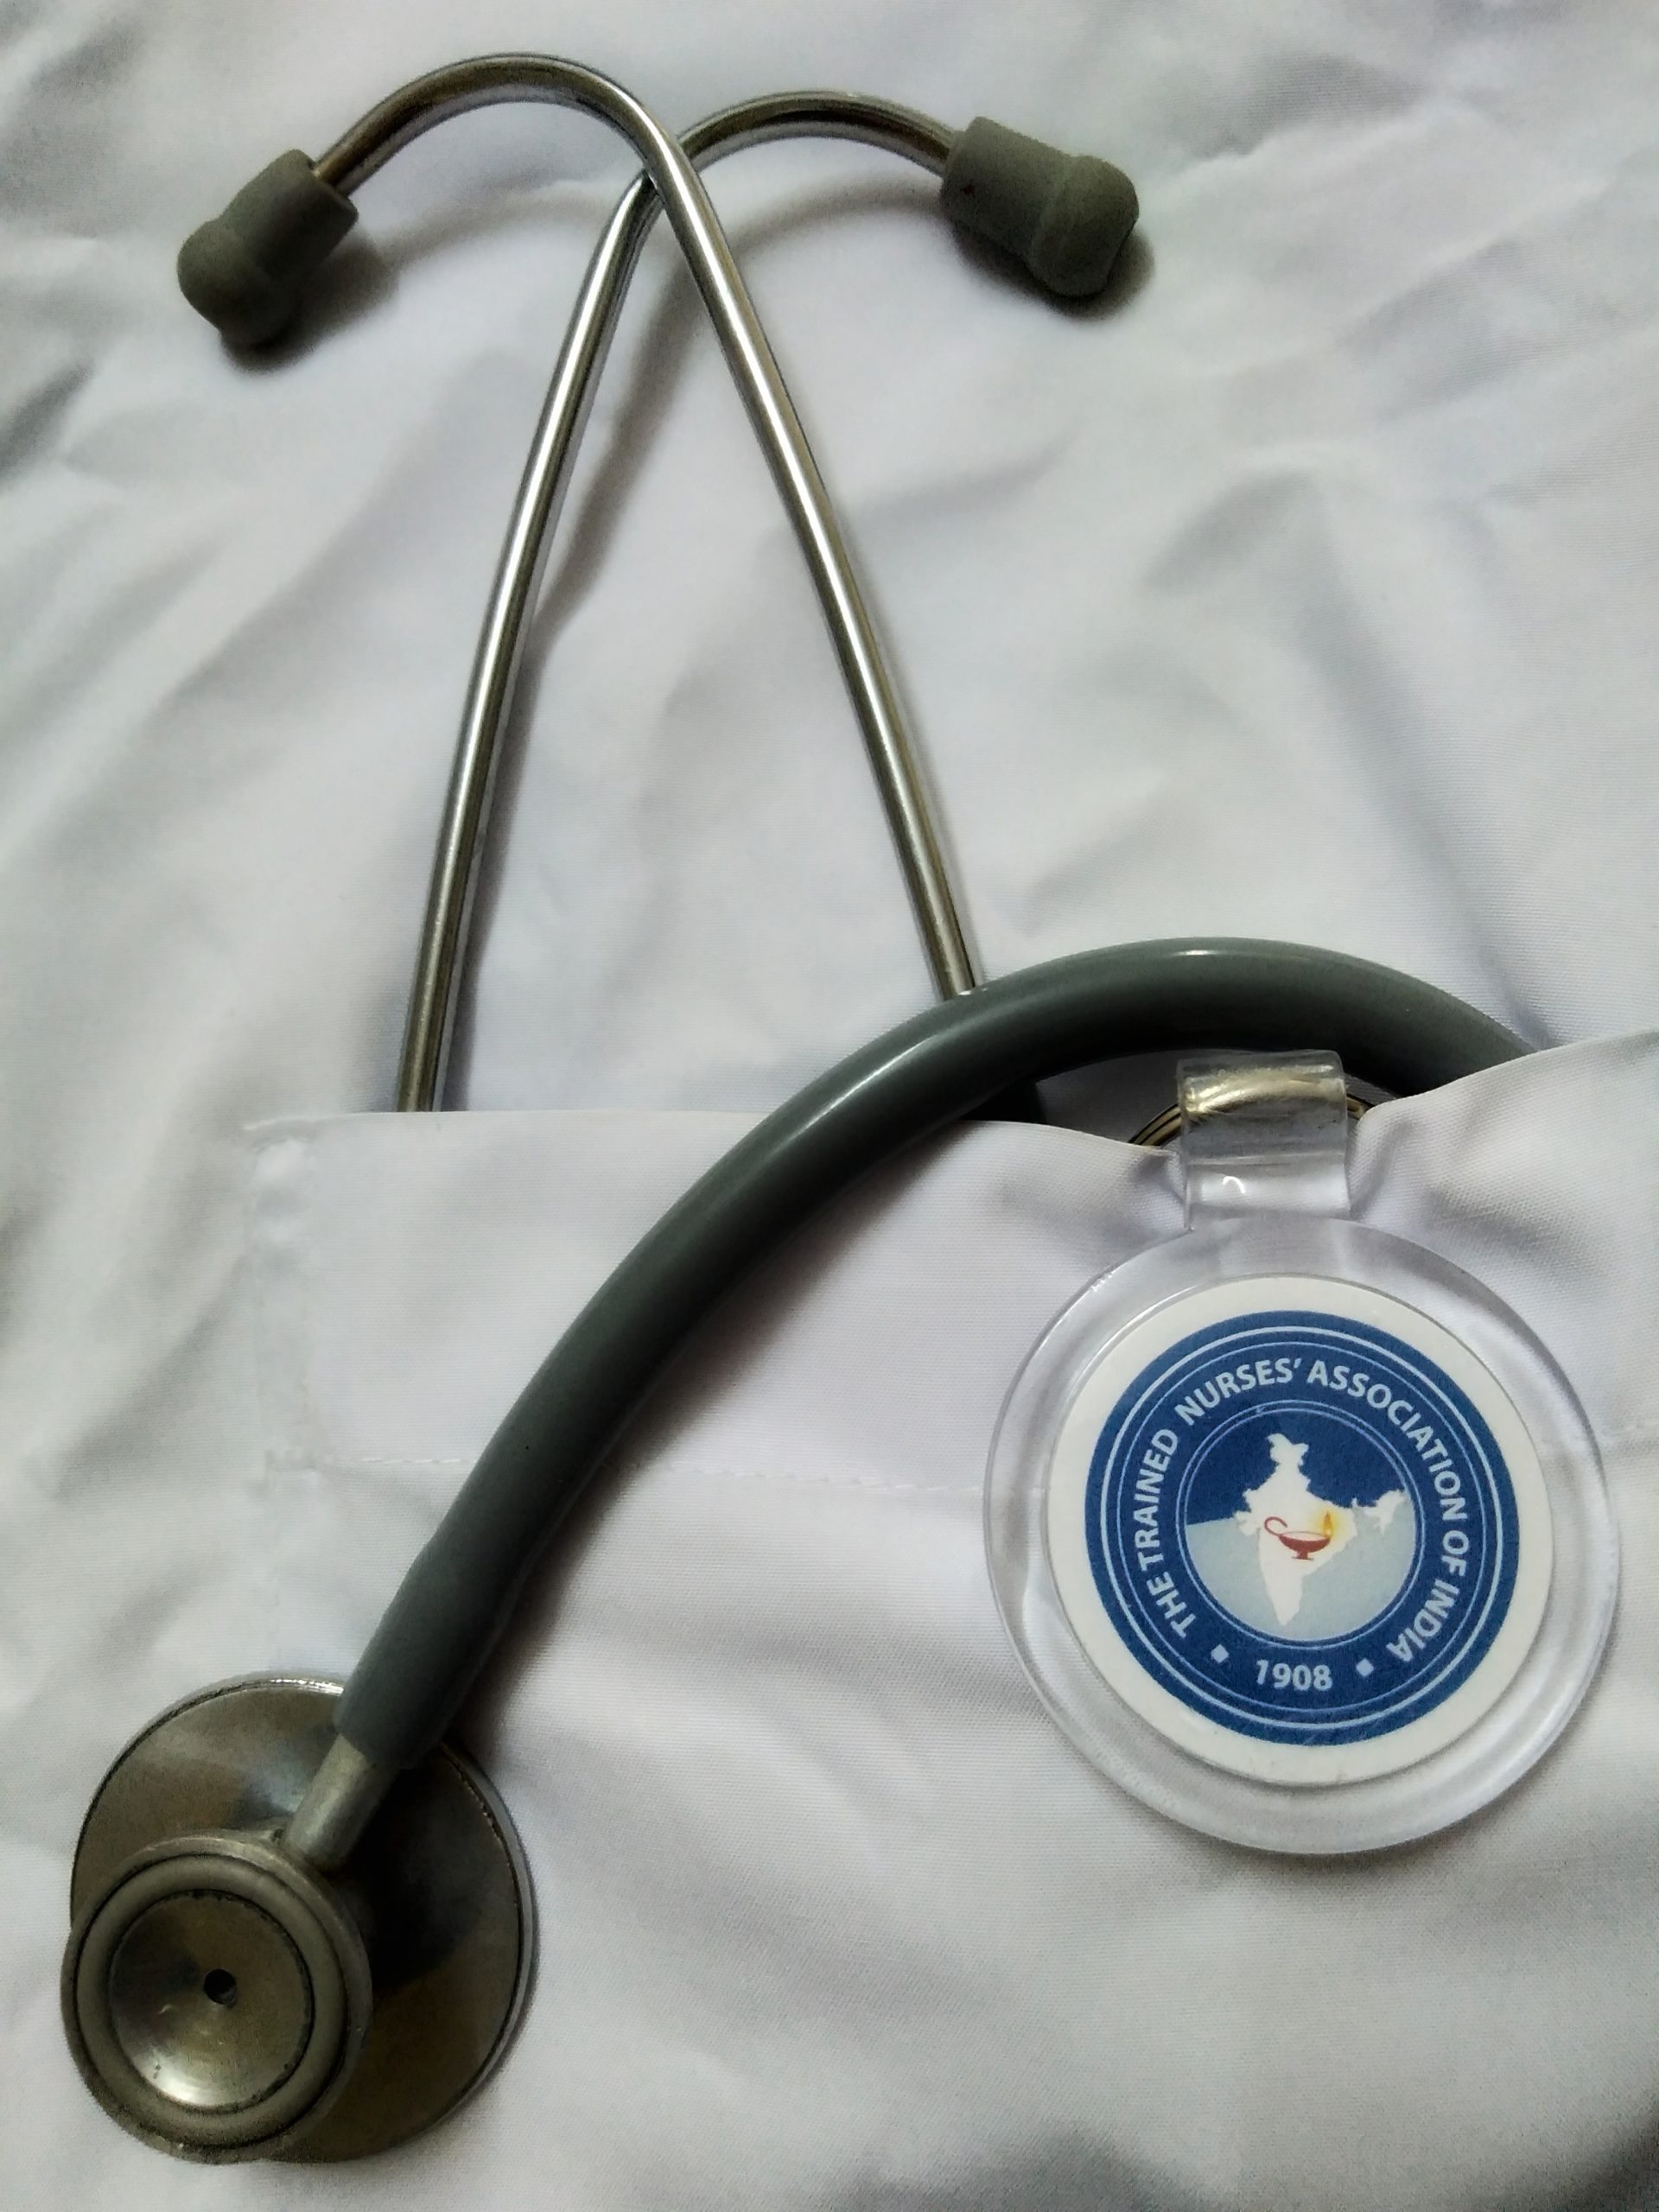 Stethoscope in pocket